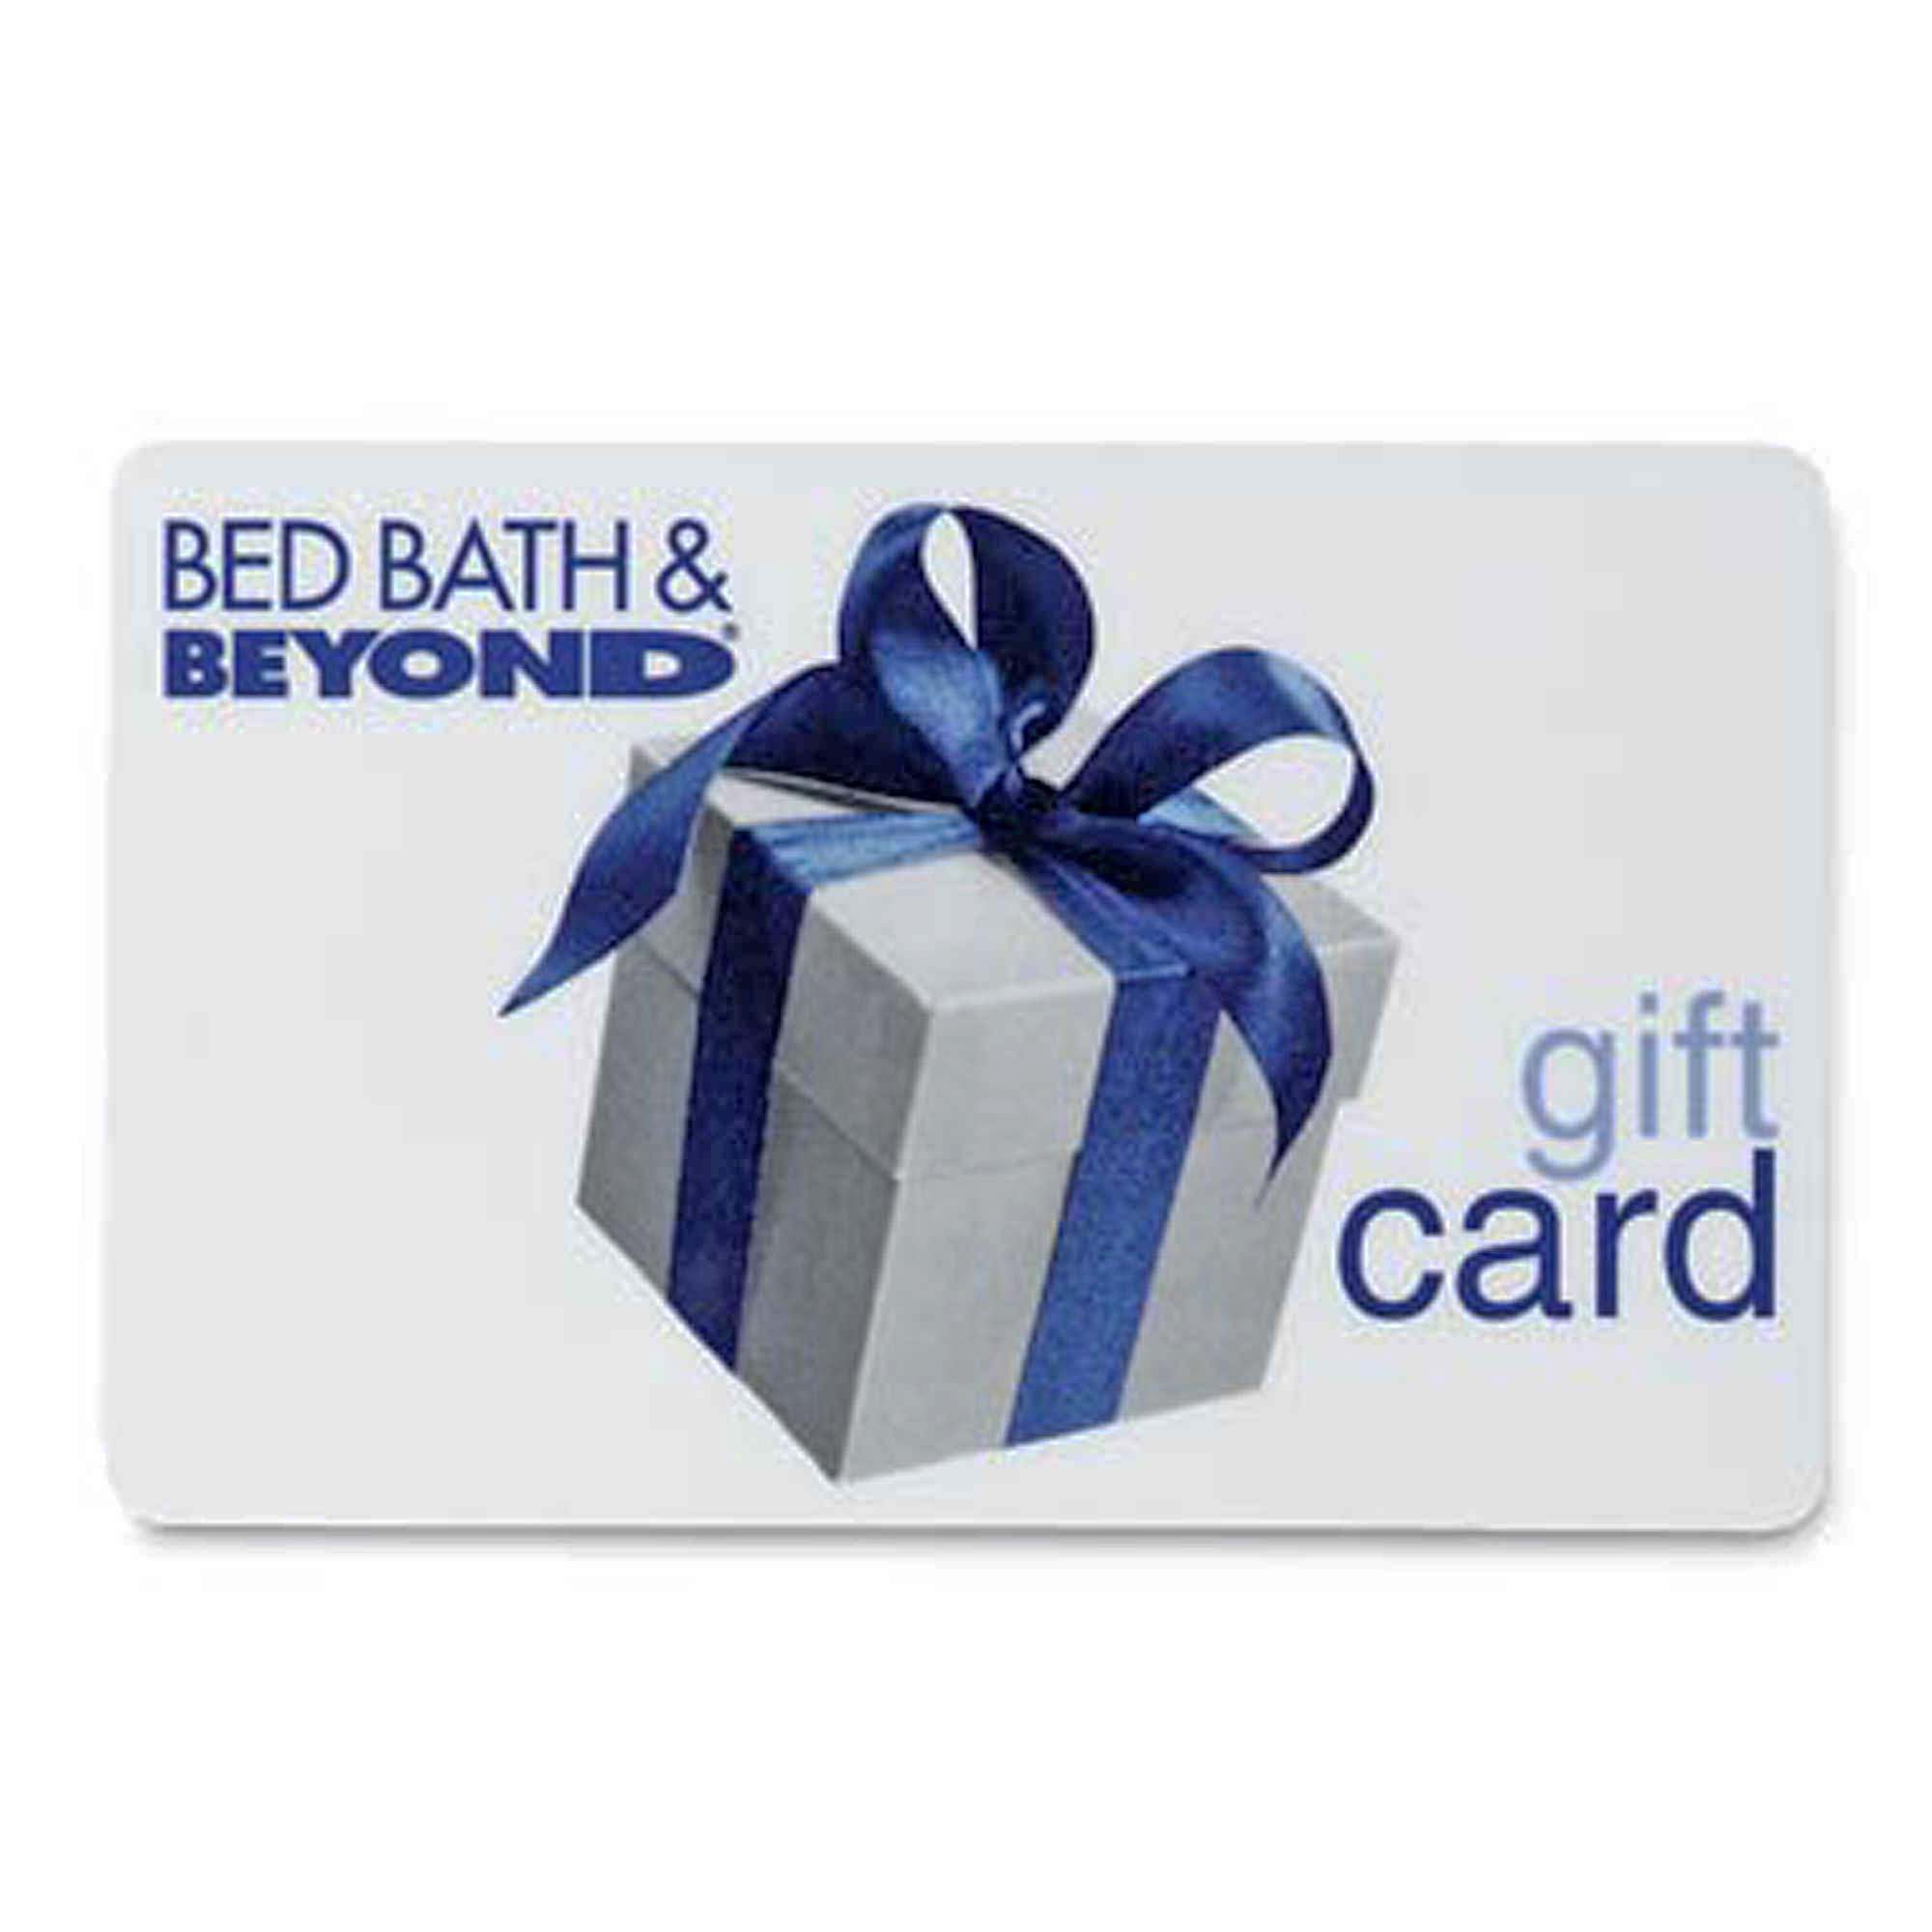 bed bath beyond gift card